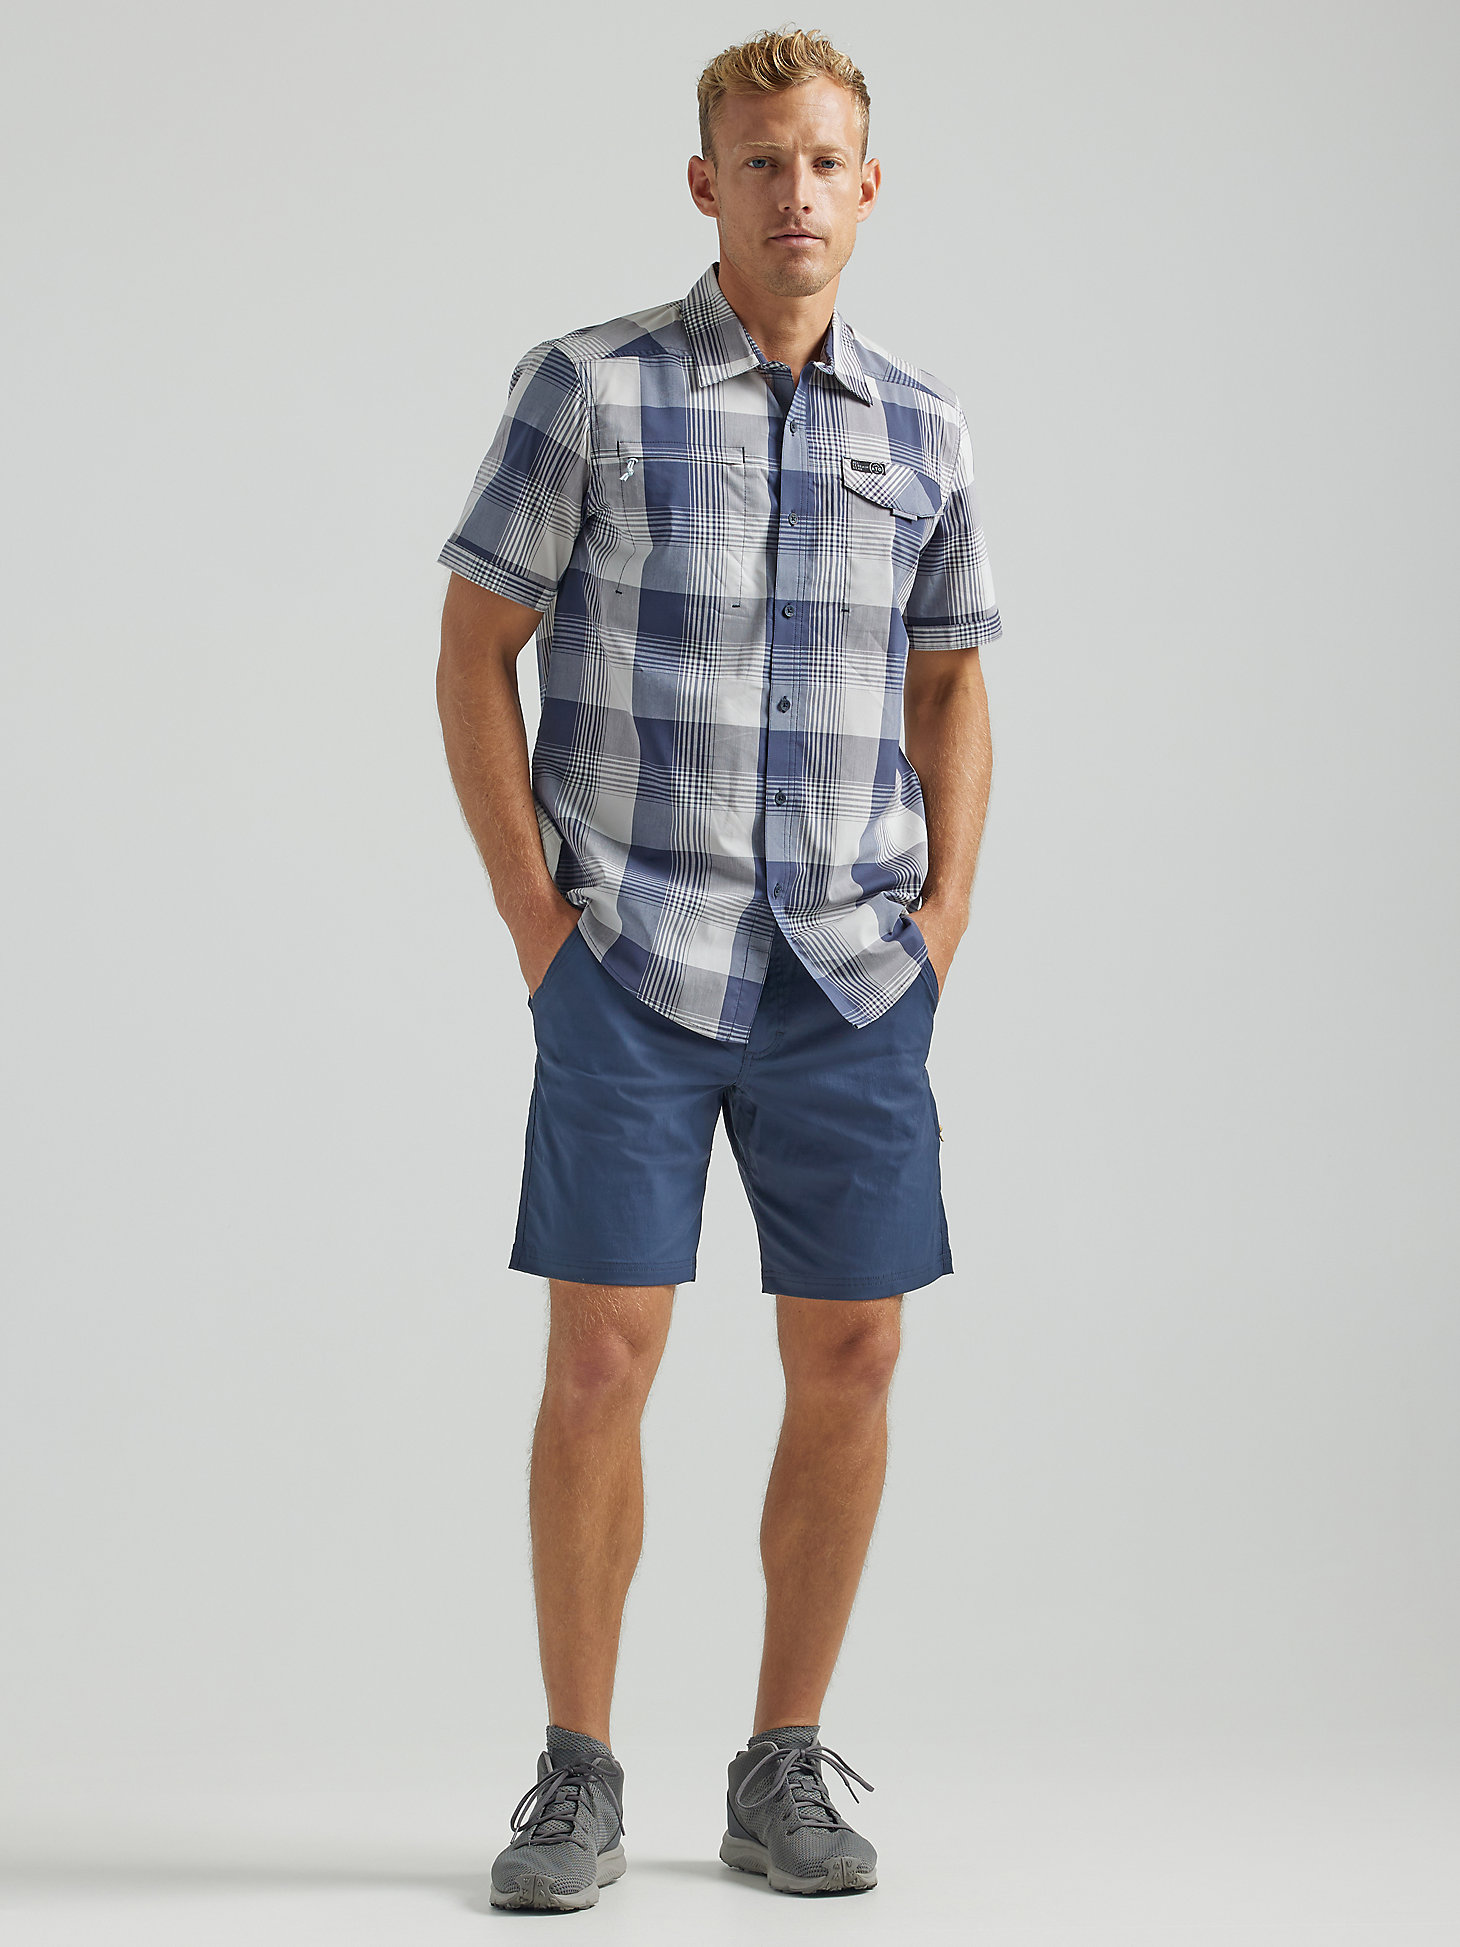 ATG By Wrangler™ Men's Asymmetrical Zip Pocket Plaid Shirt in Mist alternative view 1